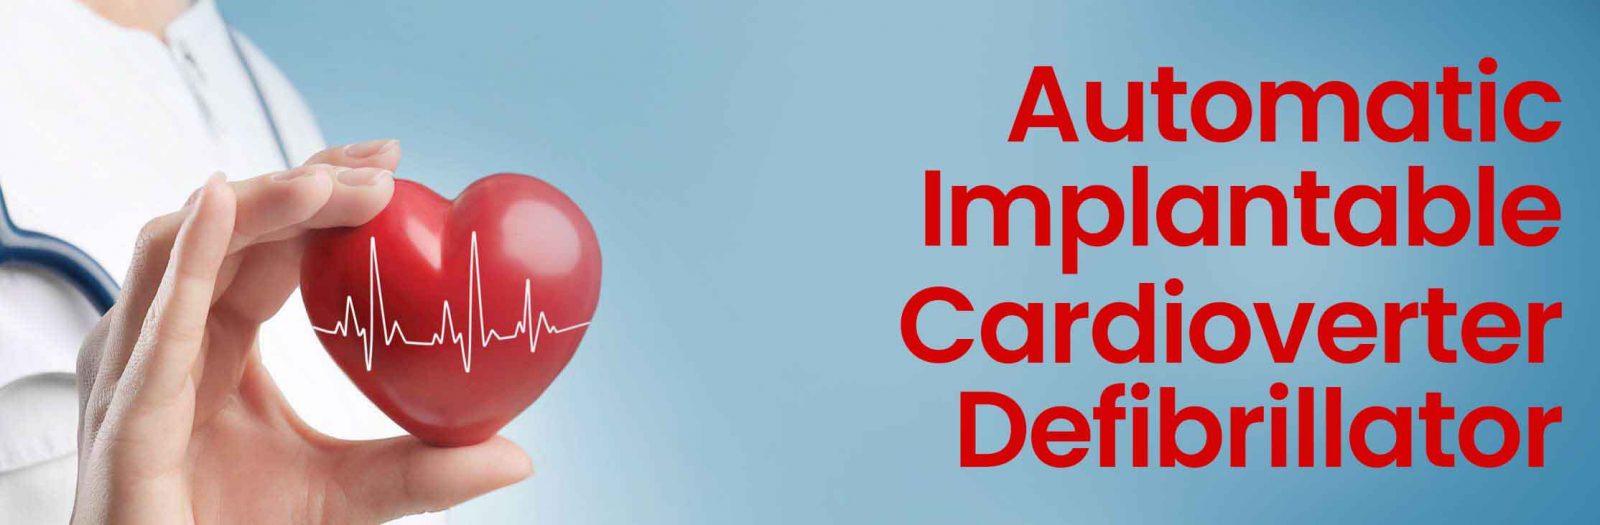 Best ACID surgery in Indore | Automatic Implantable Cardioverter Defibrillator